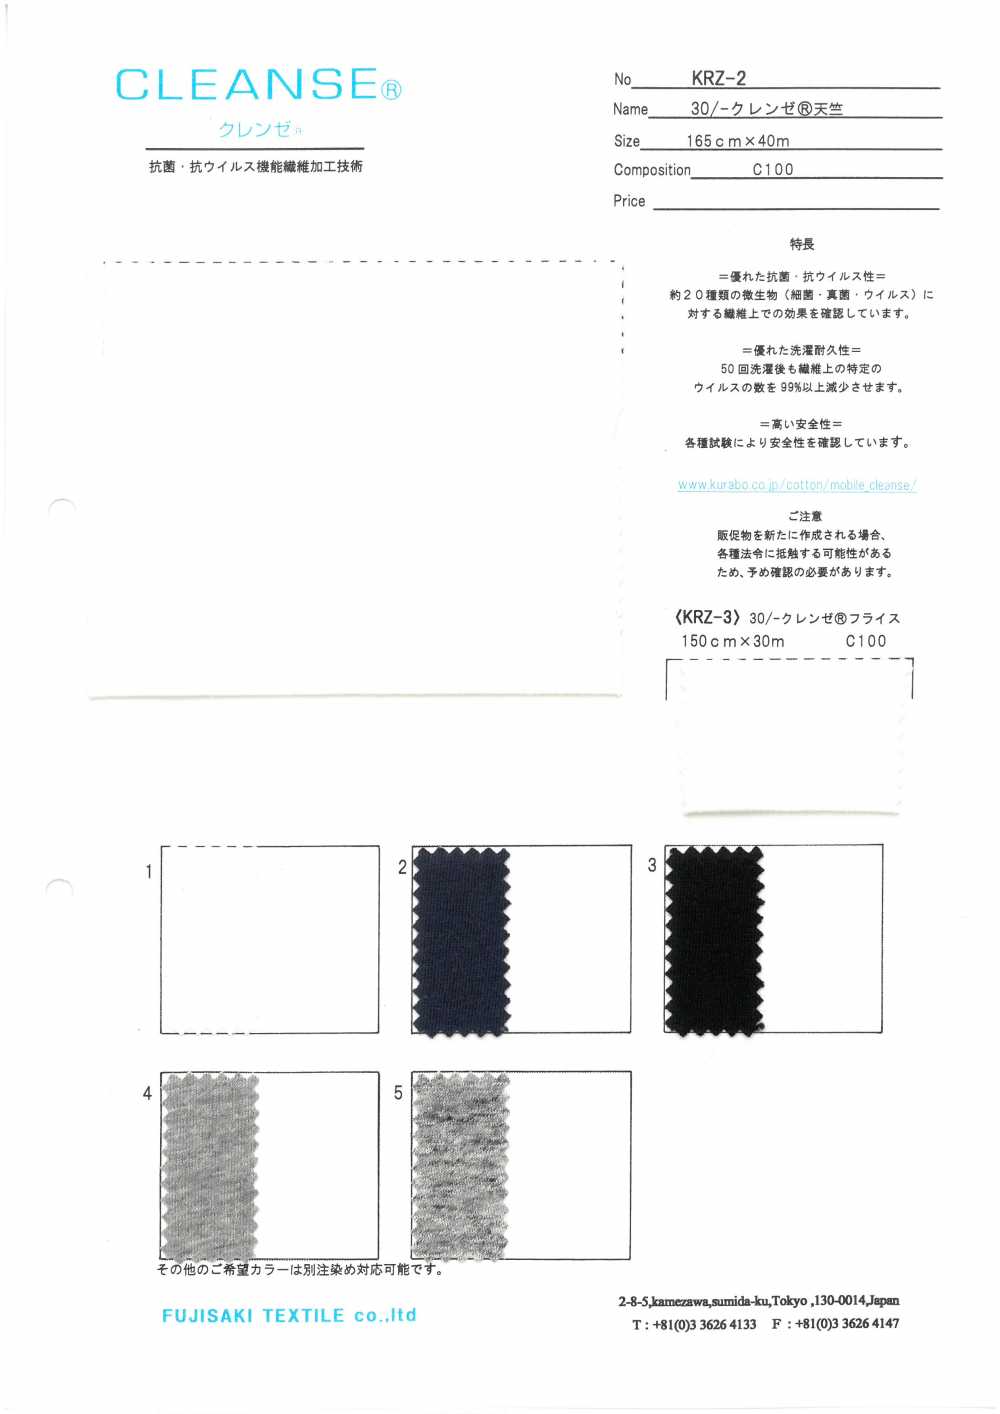 KRZ-2 30/- Maglia CLEANSE ;[Tessile / Tessuto] Fujisaki Textile